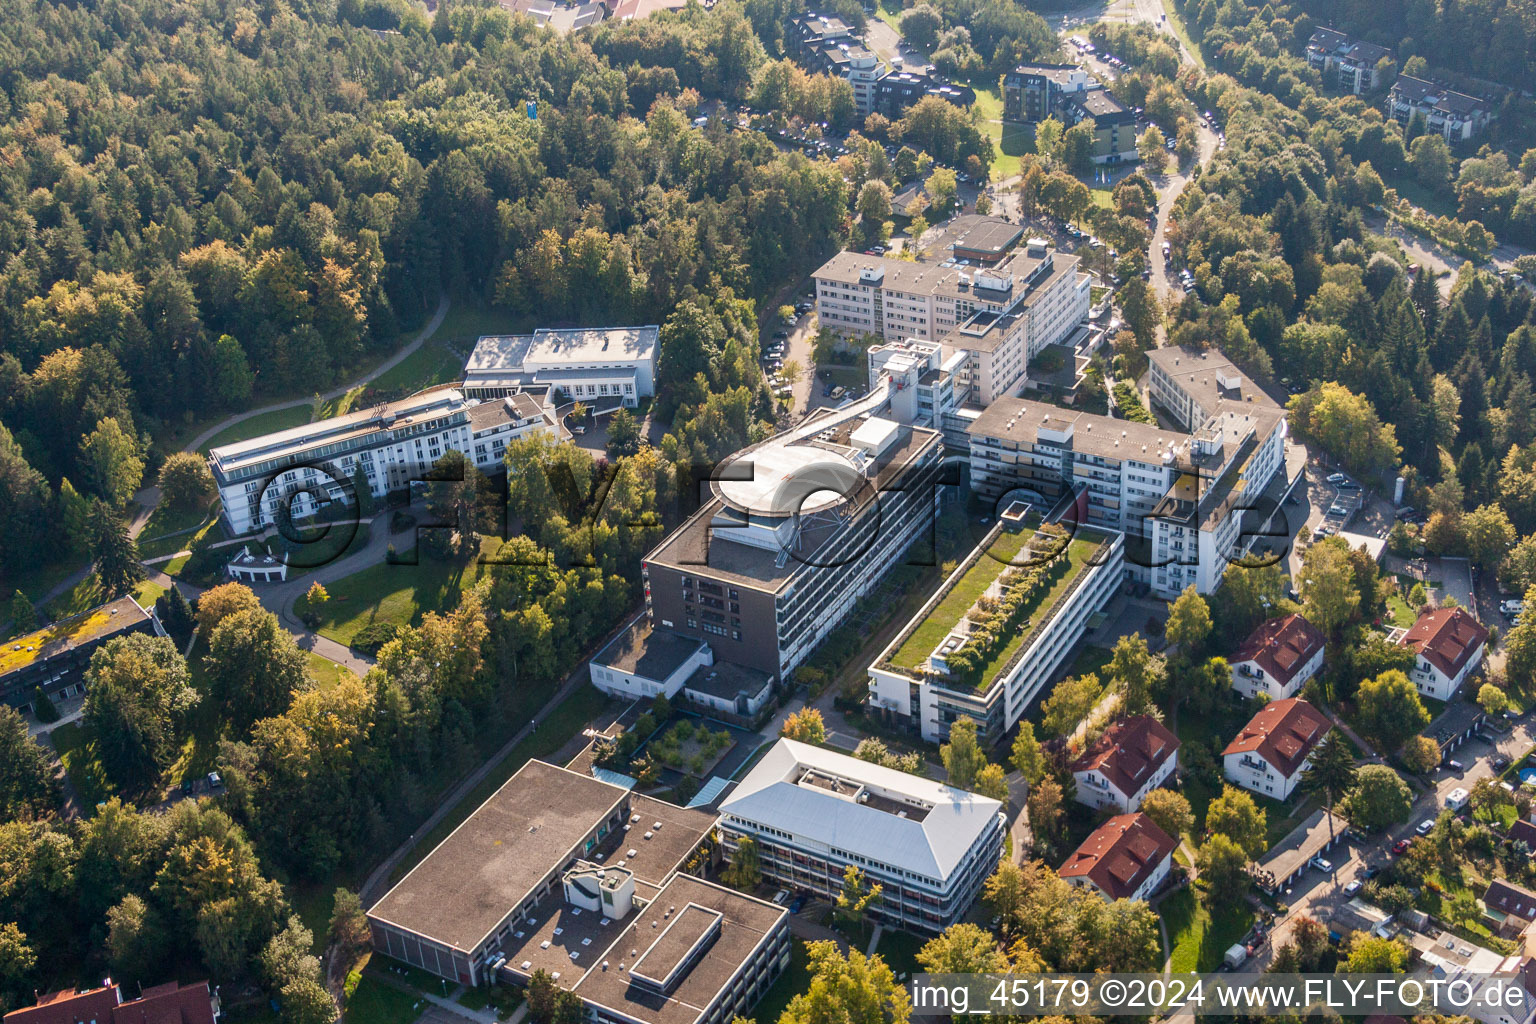 Aerial view of Hospital grounds of the Clinic SRH Klinikum Karlsbad-Langensteinbach GmbH in the district Langensteinbach in Karlsbad in the state Baden-Wurttemberg, Germany